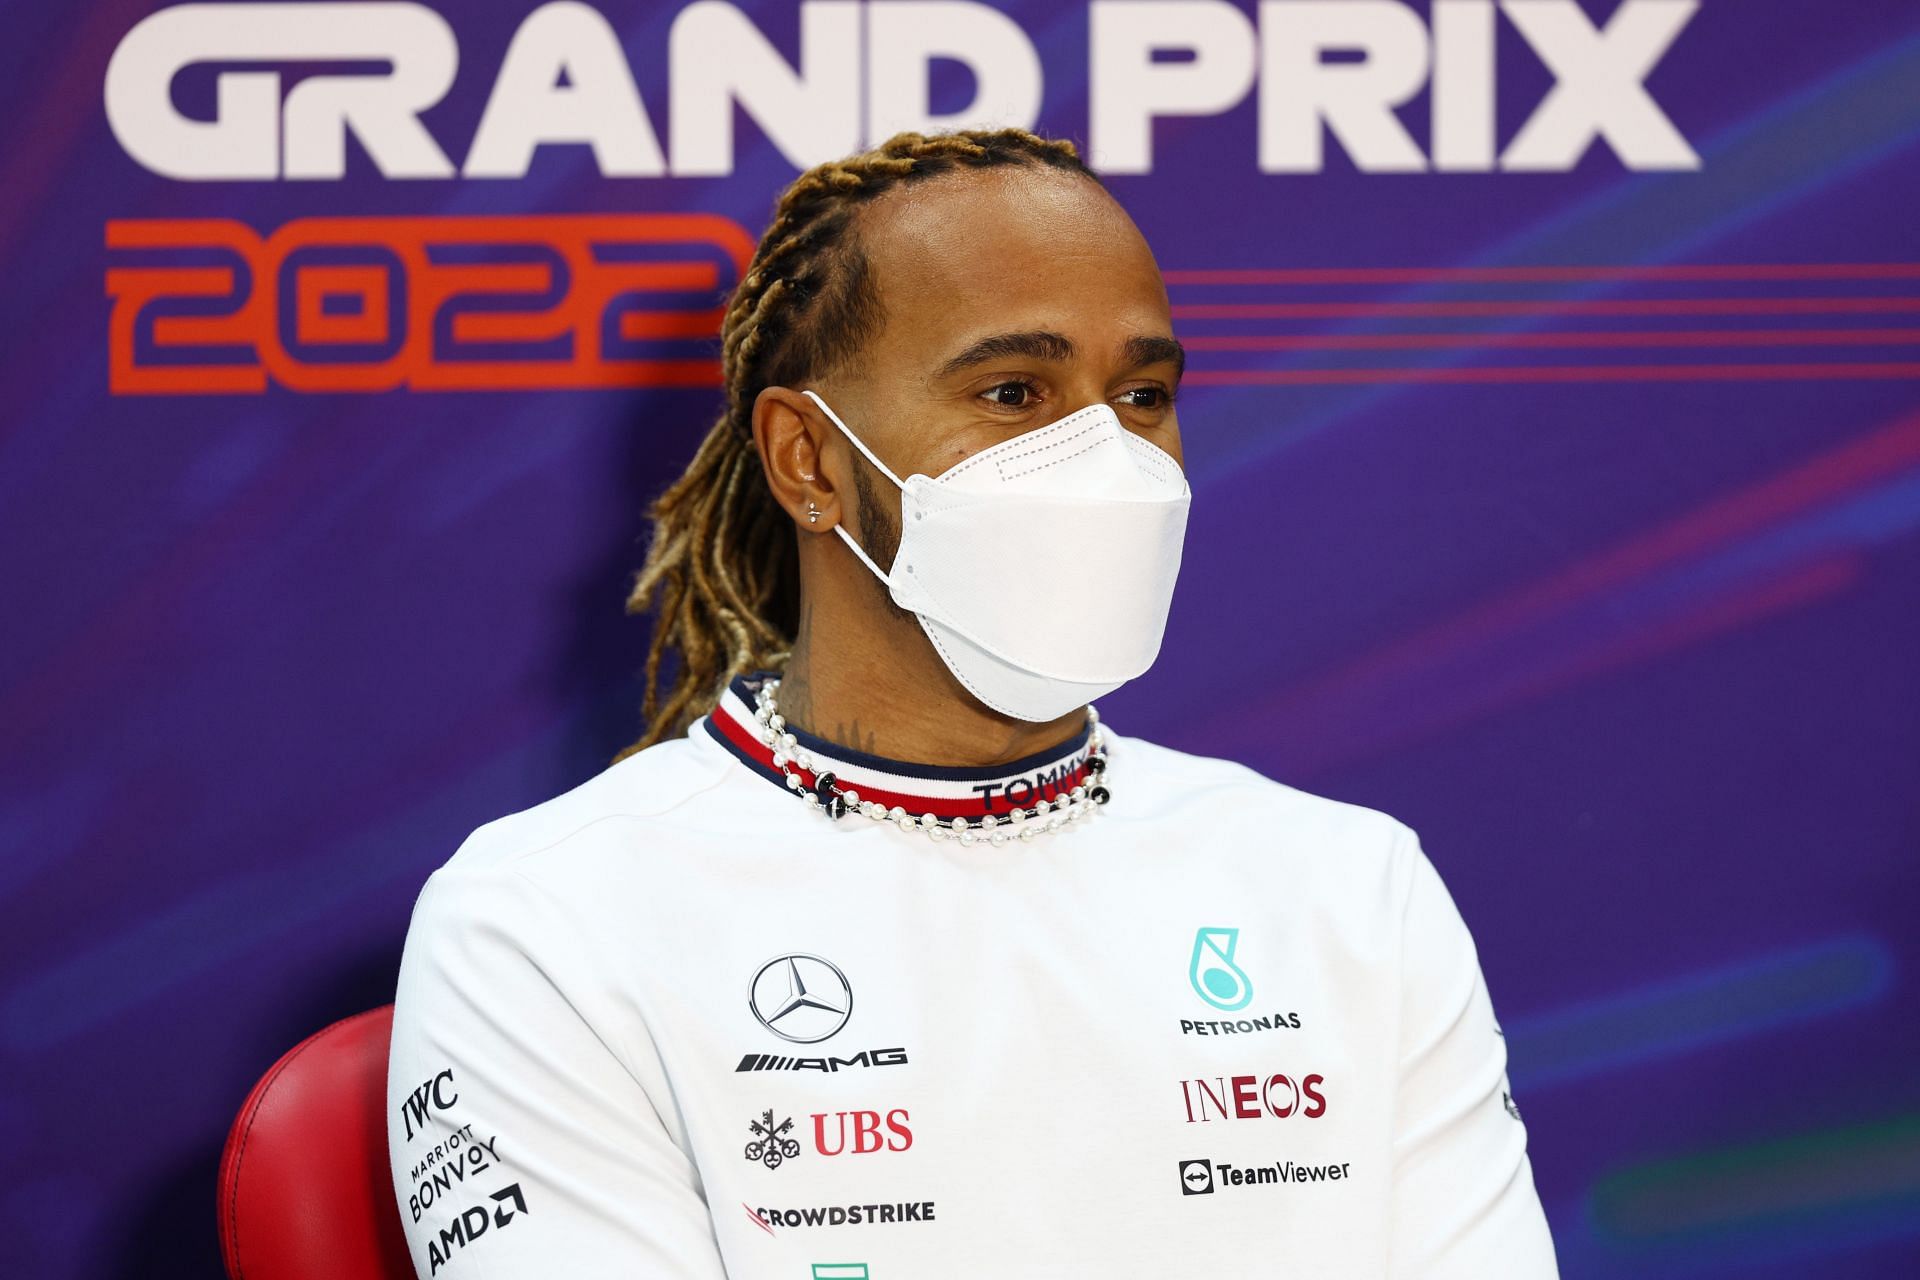 Lewis Hamilton during the F1 Grand Prix of Bahrain - Practice